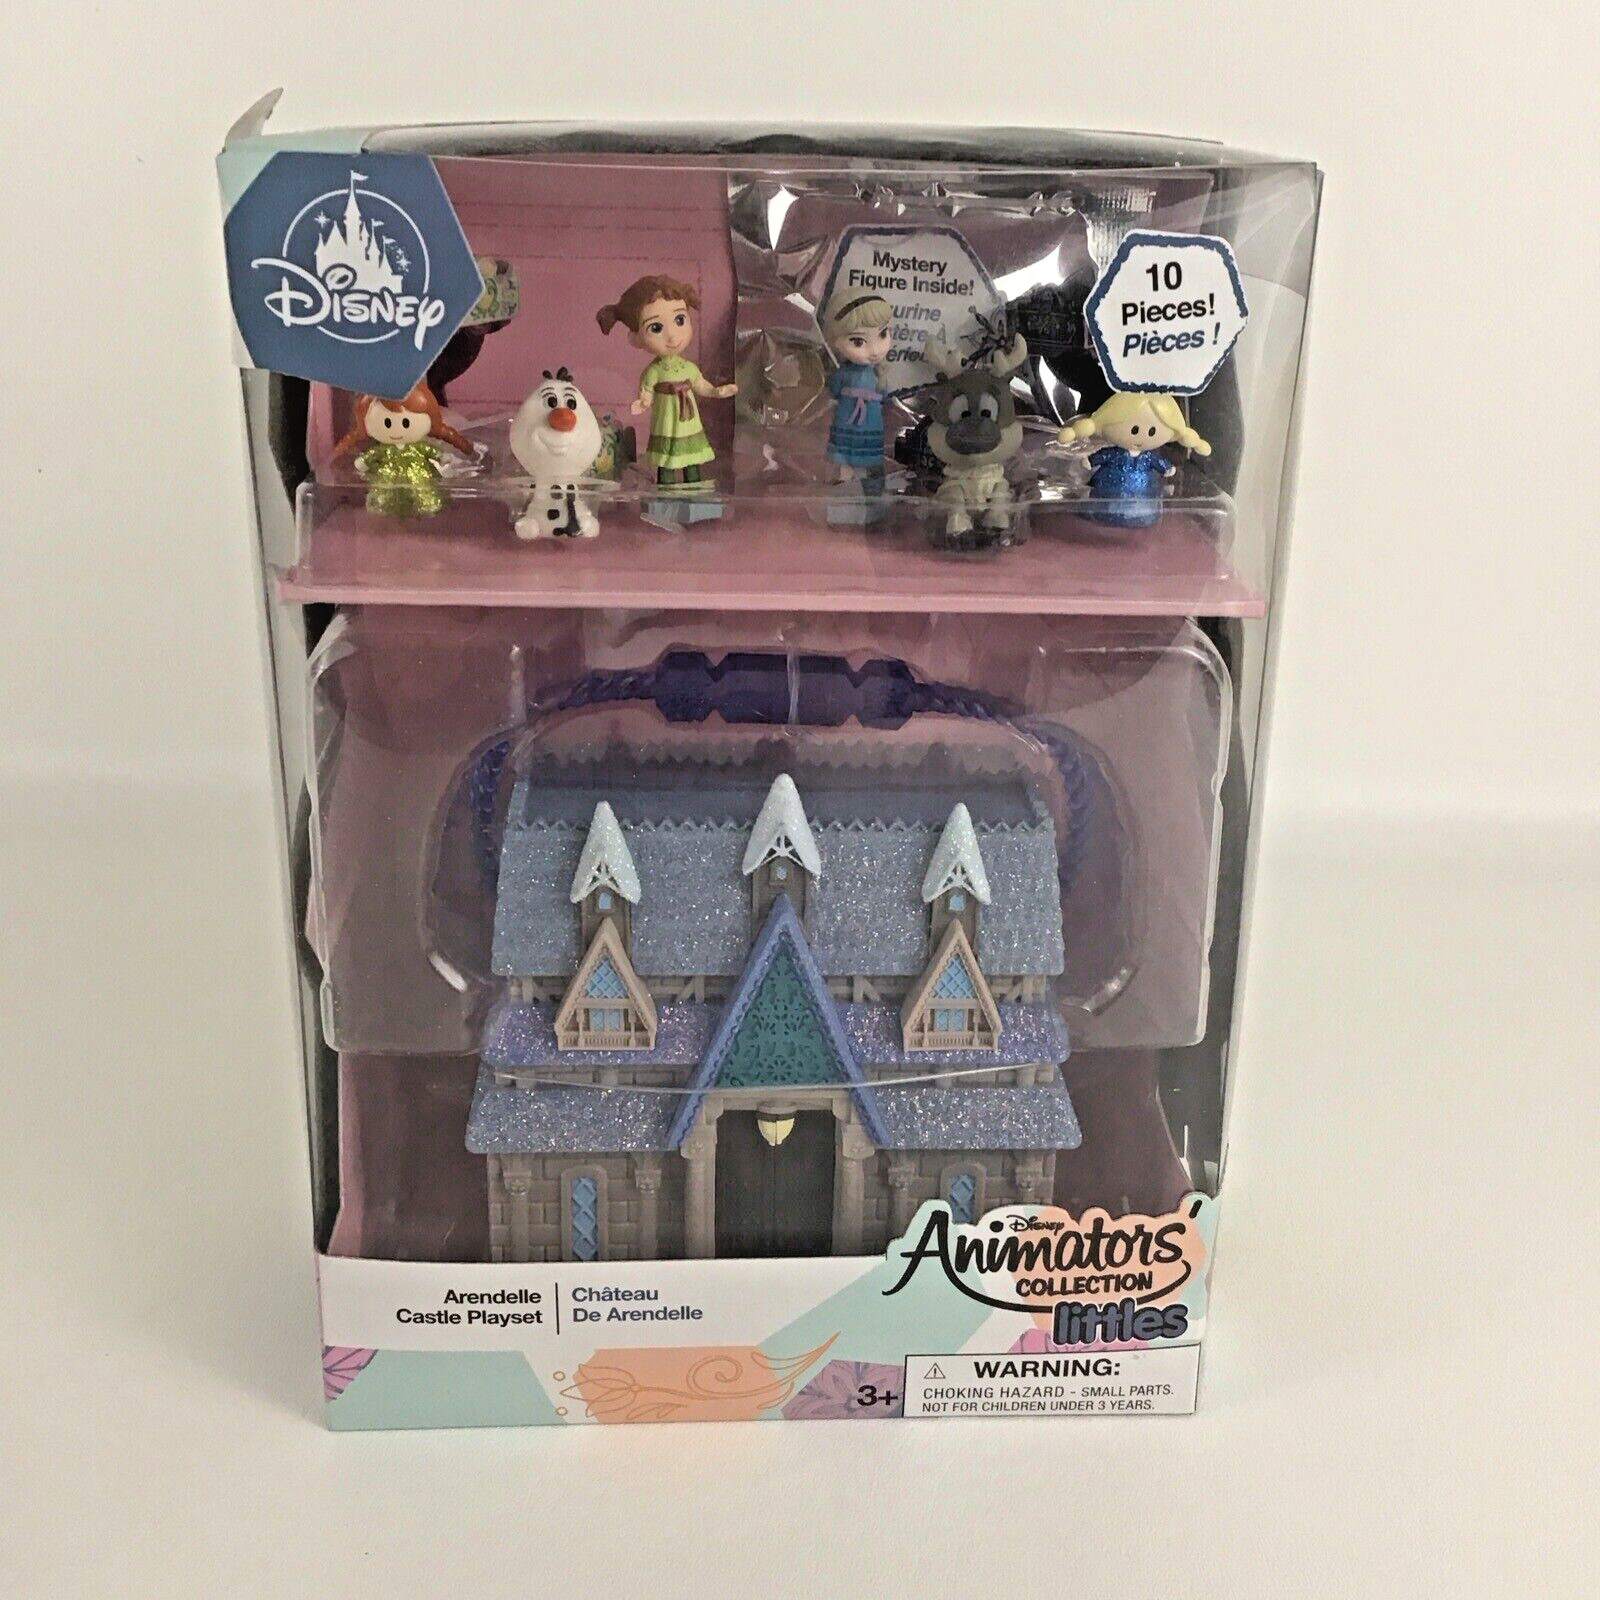 Disney Frozen Animator\'s Collection Littles Arendelle Castle Playset Figures New